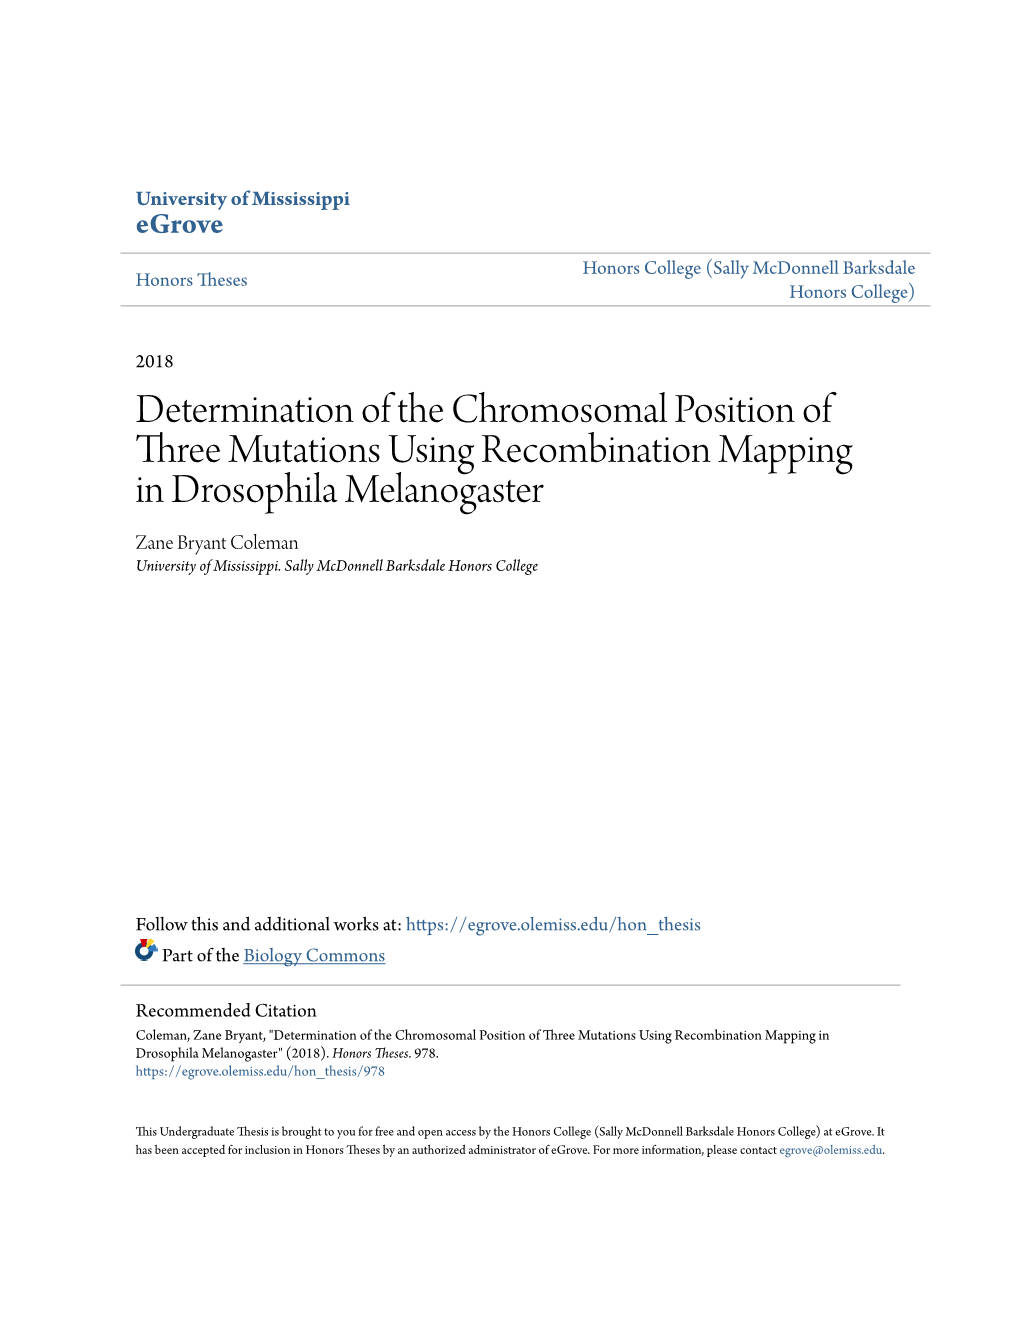 Determination of the Chromosomal Position of Three Mutations Using Recombination Mapping in Drosophila Melanogaster Zane Bryant Coleman University of Mississippi